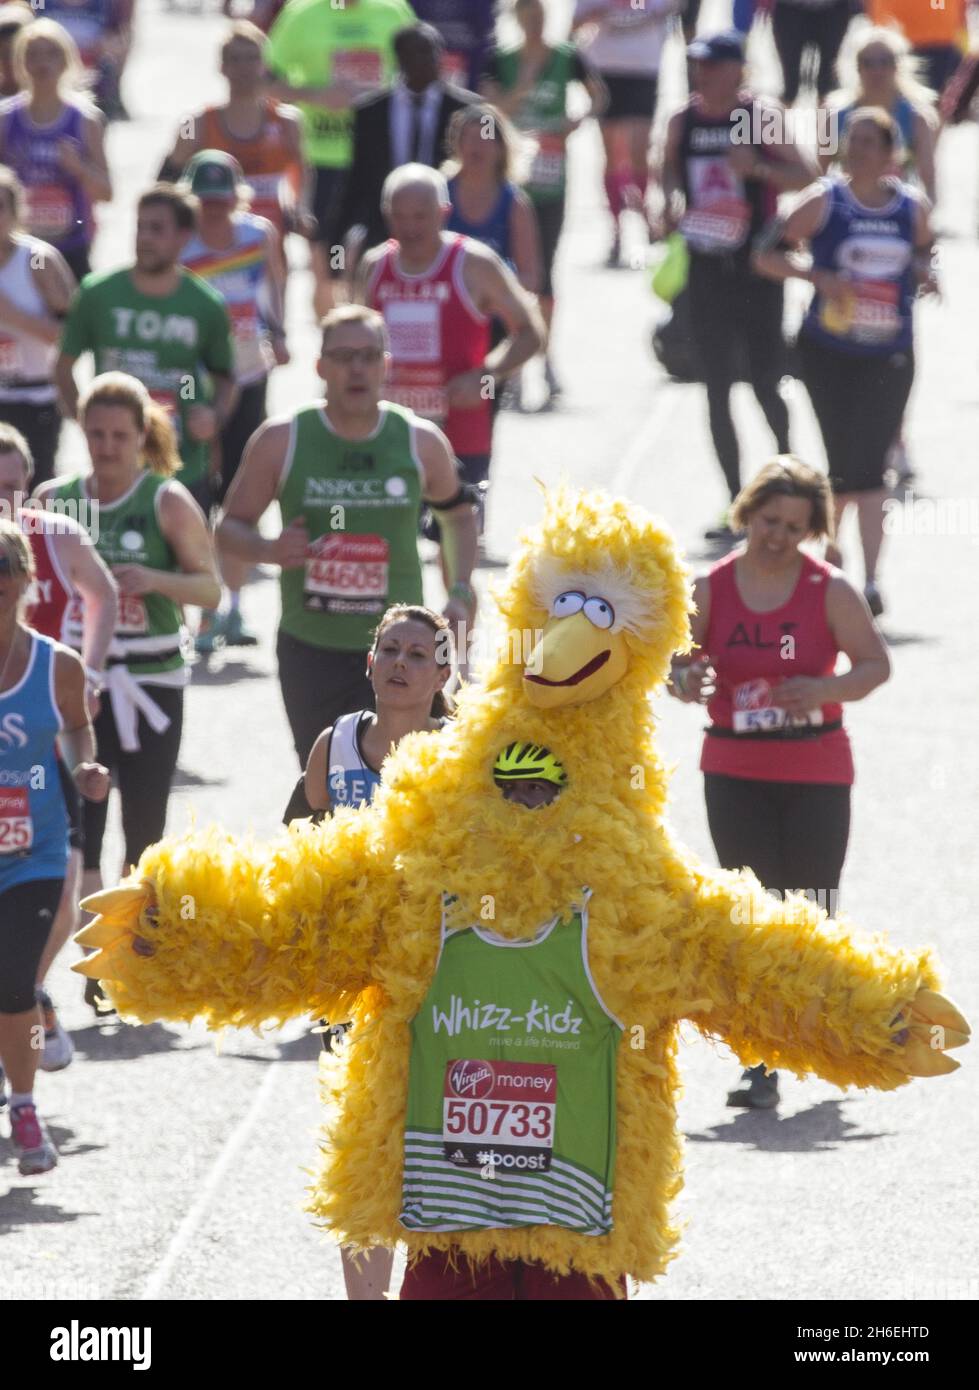 https://c8.alamy.com/comp/2H6EHTD/a-runner-dressed-as-big-bird-at-the-finish-line-at-the-london-marathon-2H6EHTD.jpg
